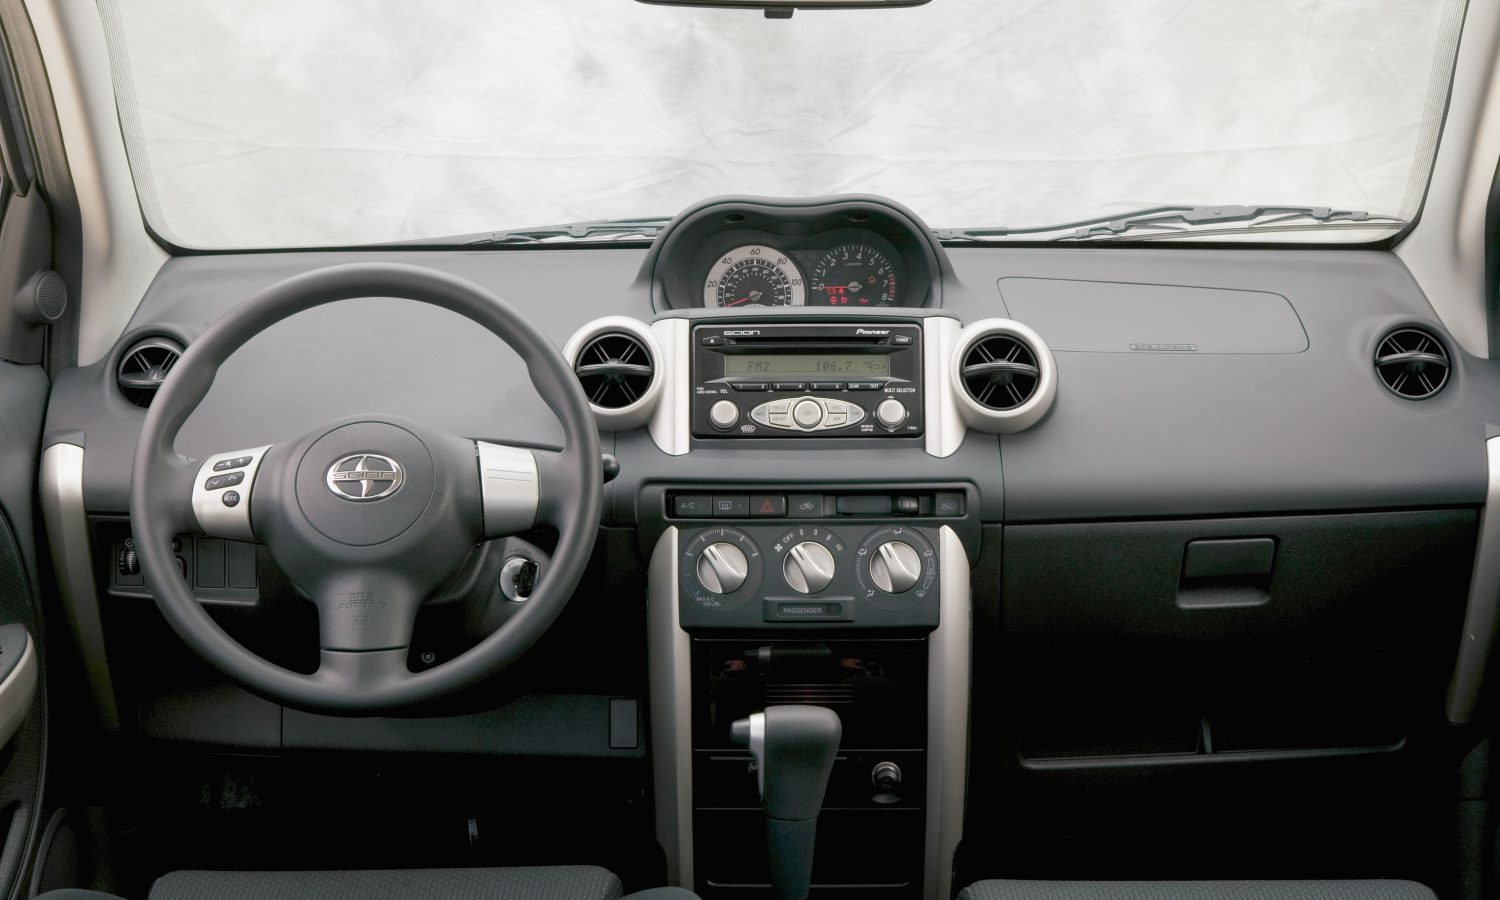 2006 Scion xA interior 019 - Toyota USA Newsroom